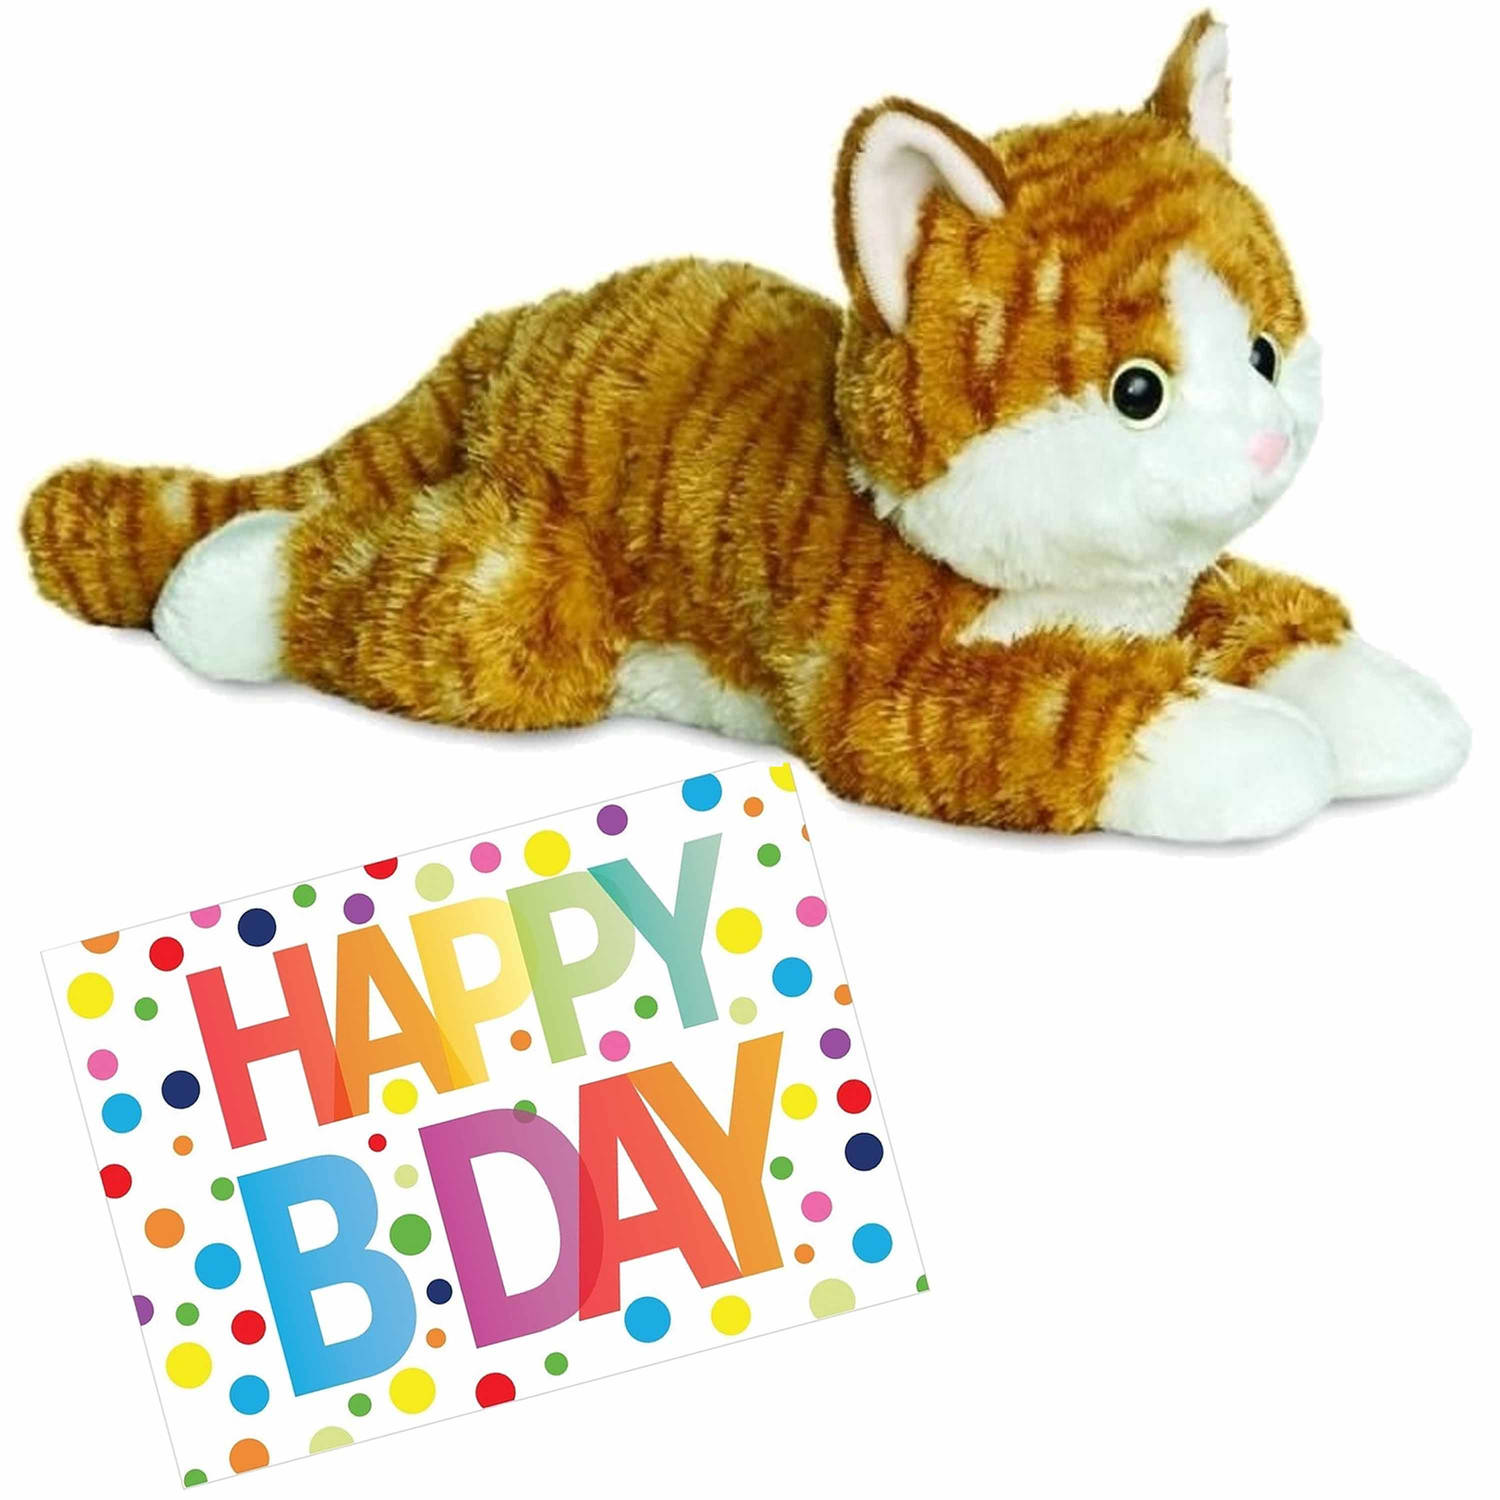 Pluche knuffel kat-poes rood 30 cm met A5-size Happy Birthday wenskaart Knuffel huisdieren